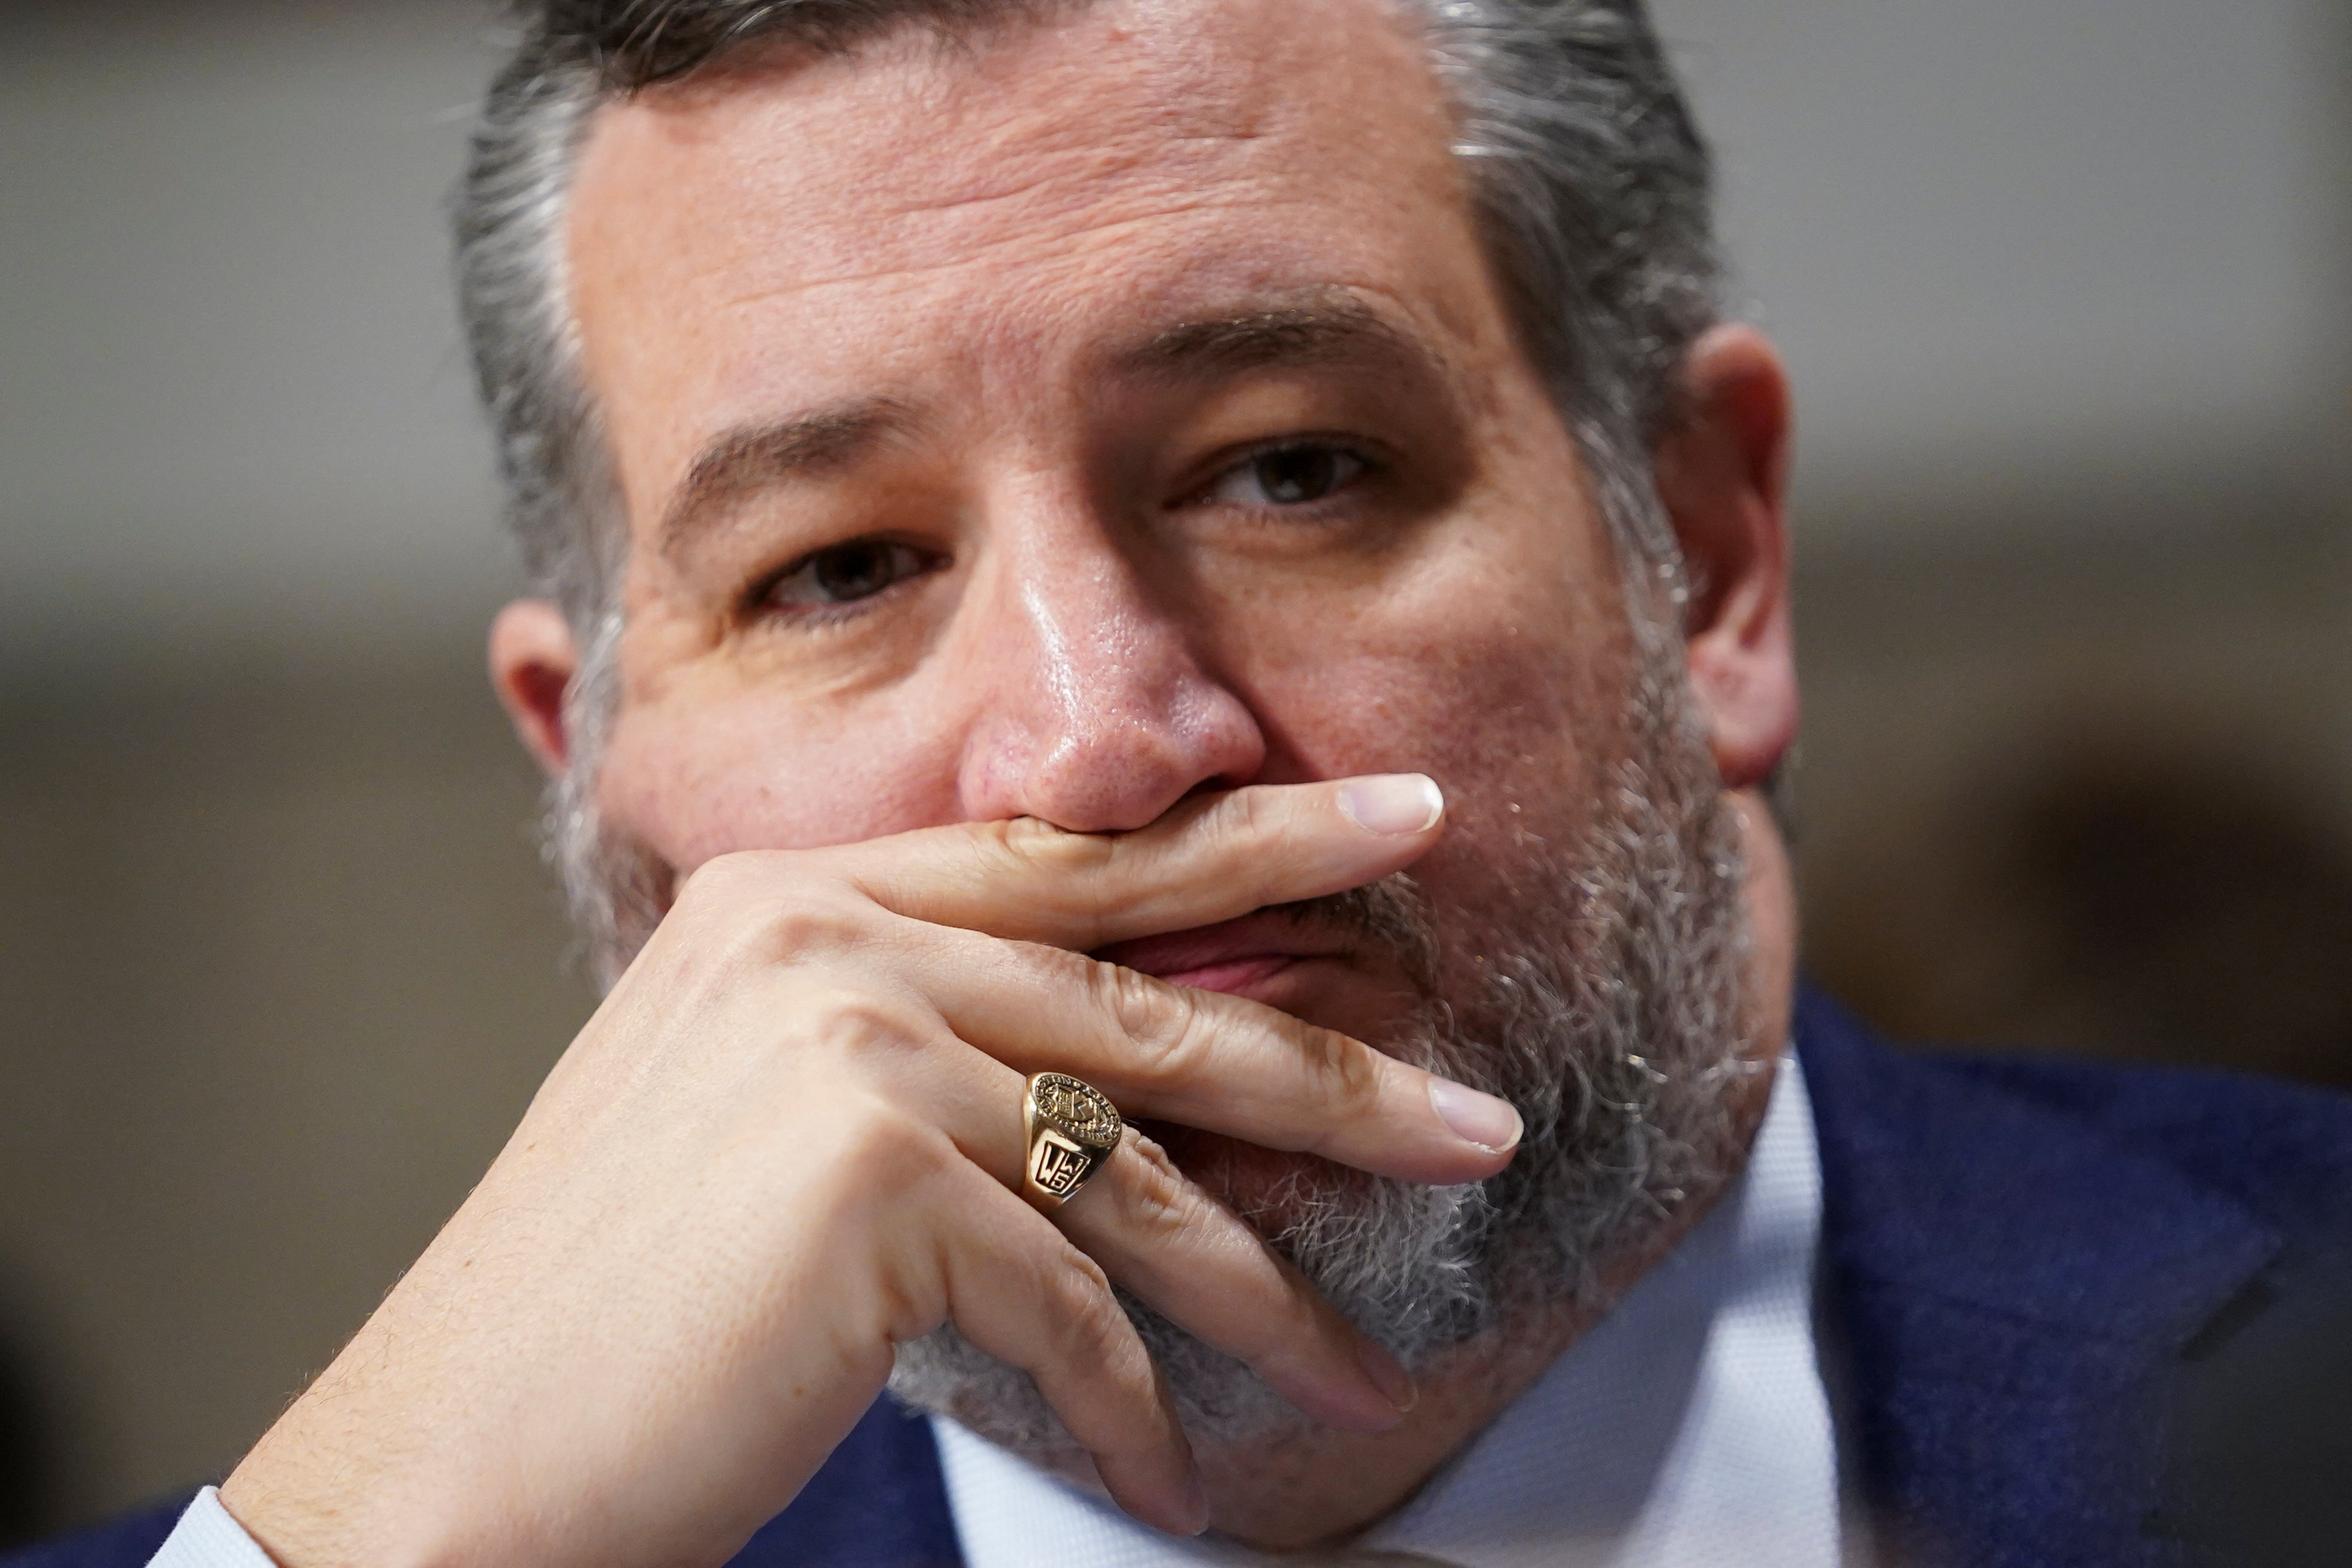 Senator Ted Cruz has said he wants airport escorts for lawmakers